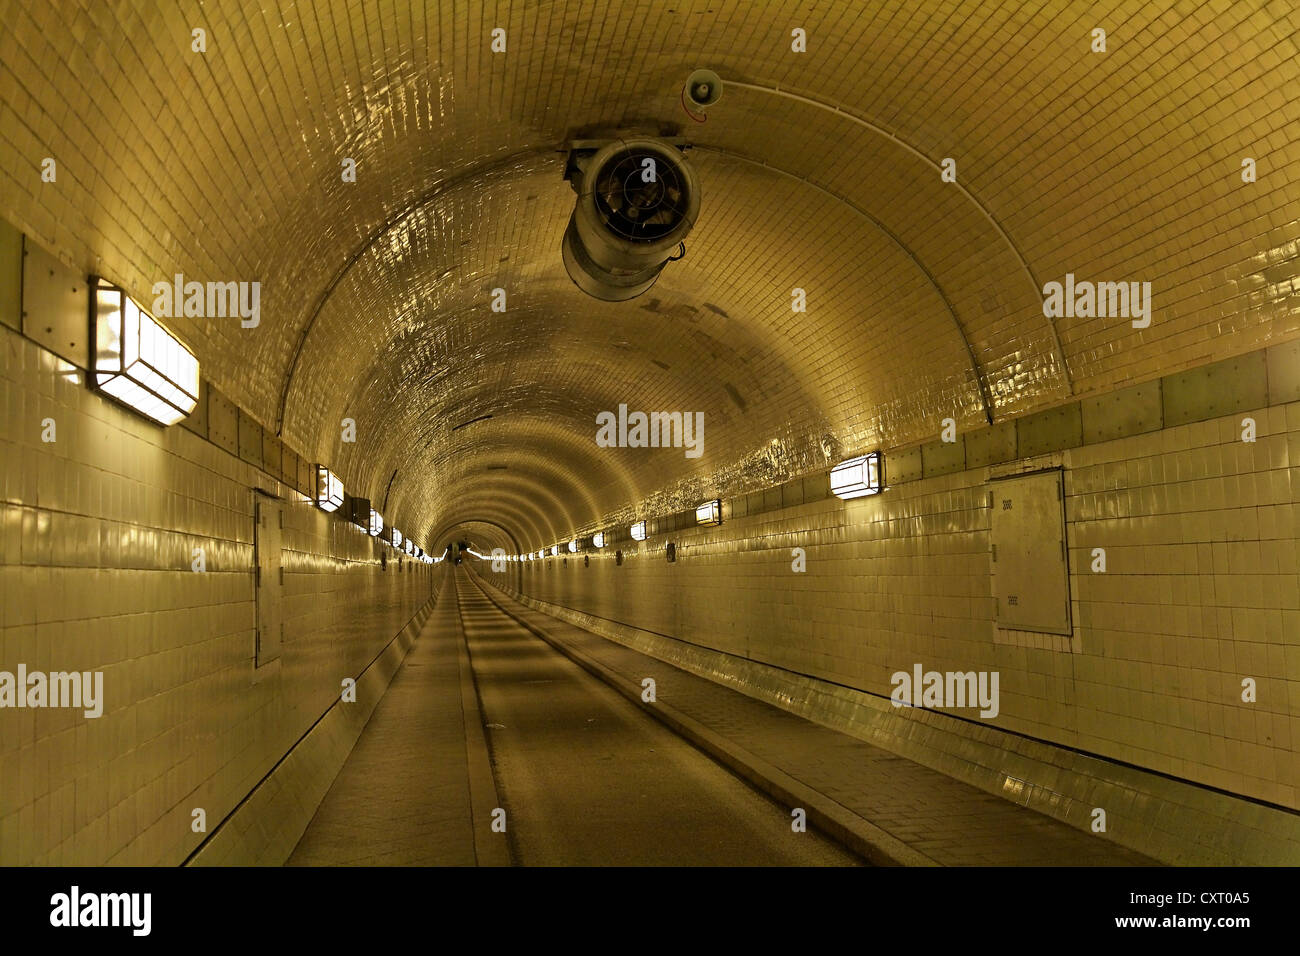 Alter Elbtunnel tunnel, vecchio tunnel Elba, Amburgo, Germania, Europa Foto Stock